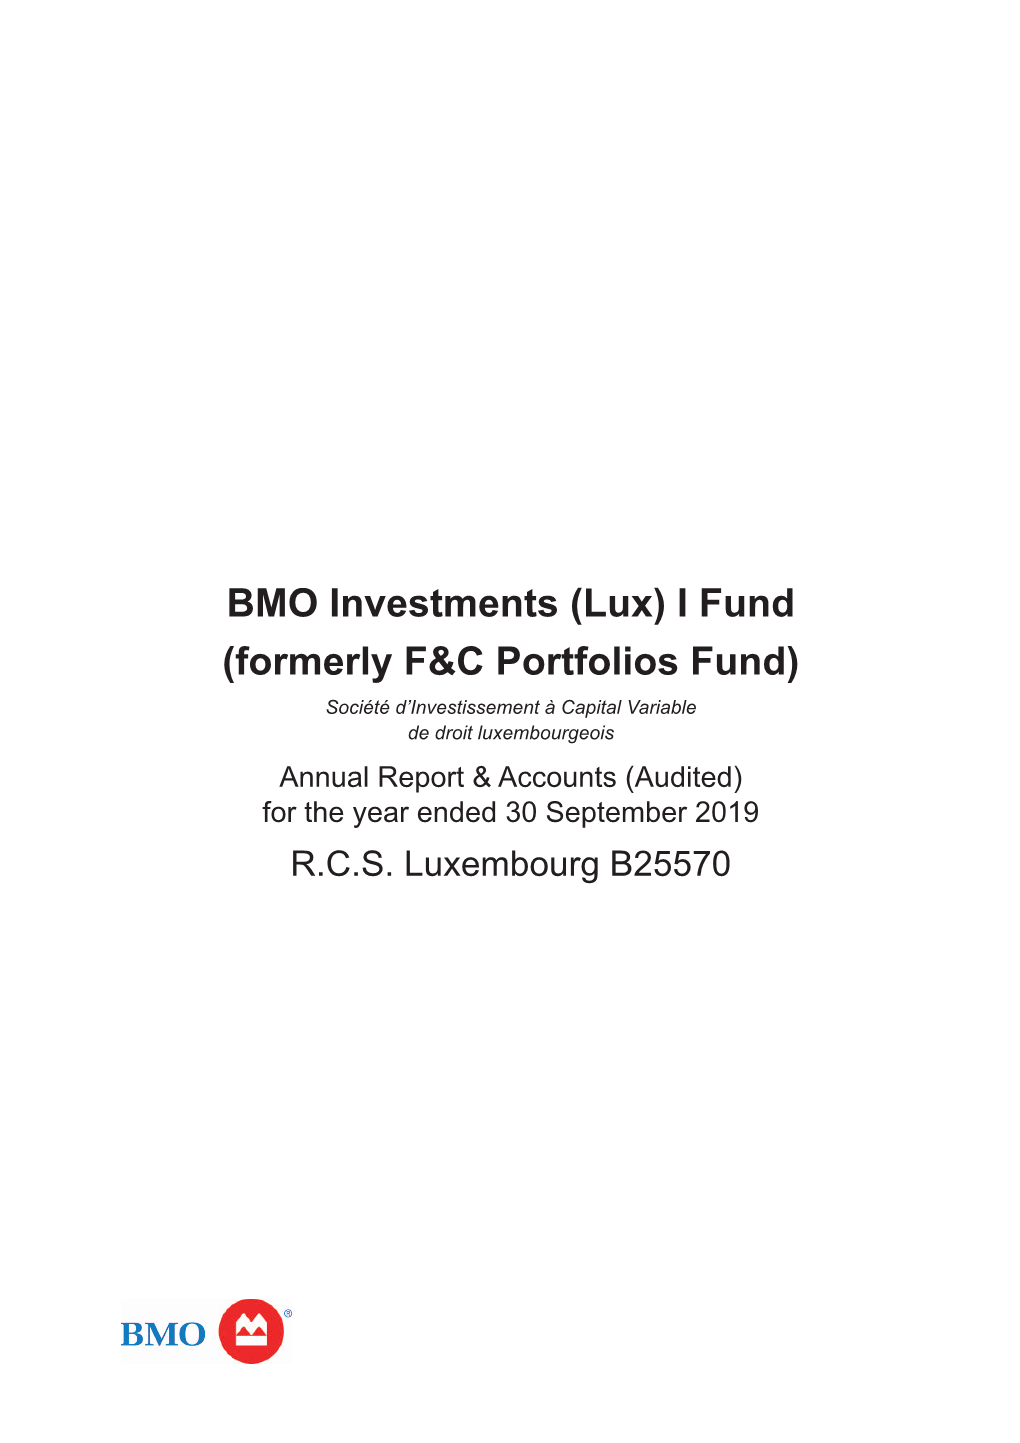 BMO Investments (Lux) I Fund (Formerly F&C Portfolios Fund)